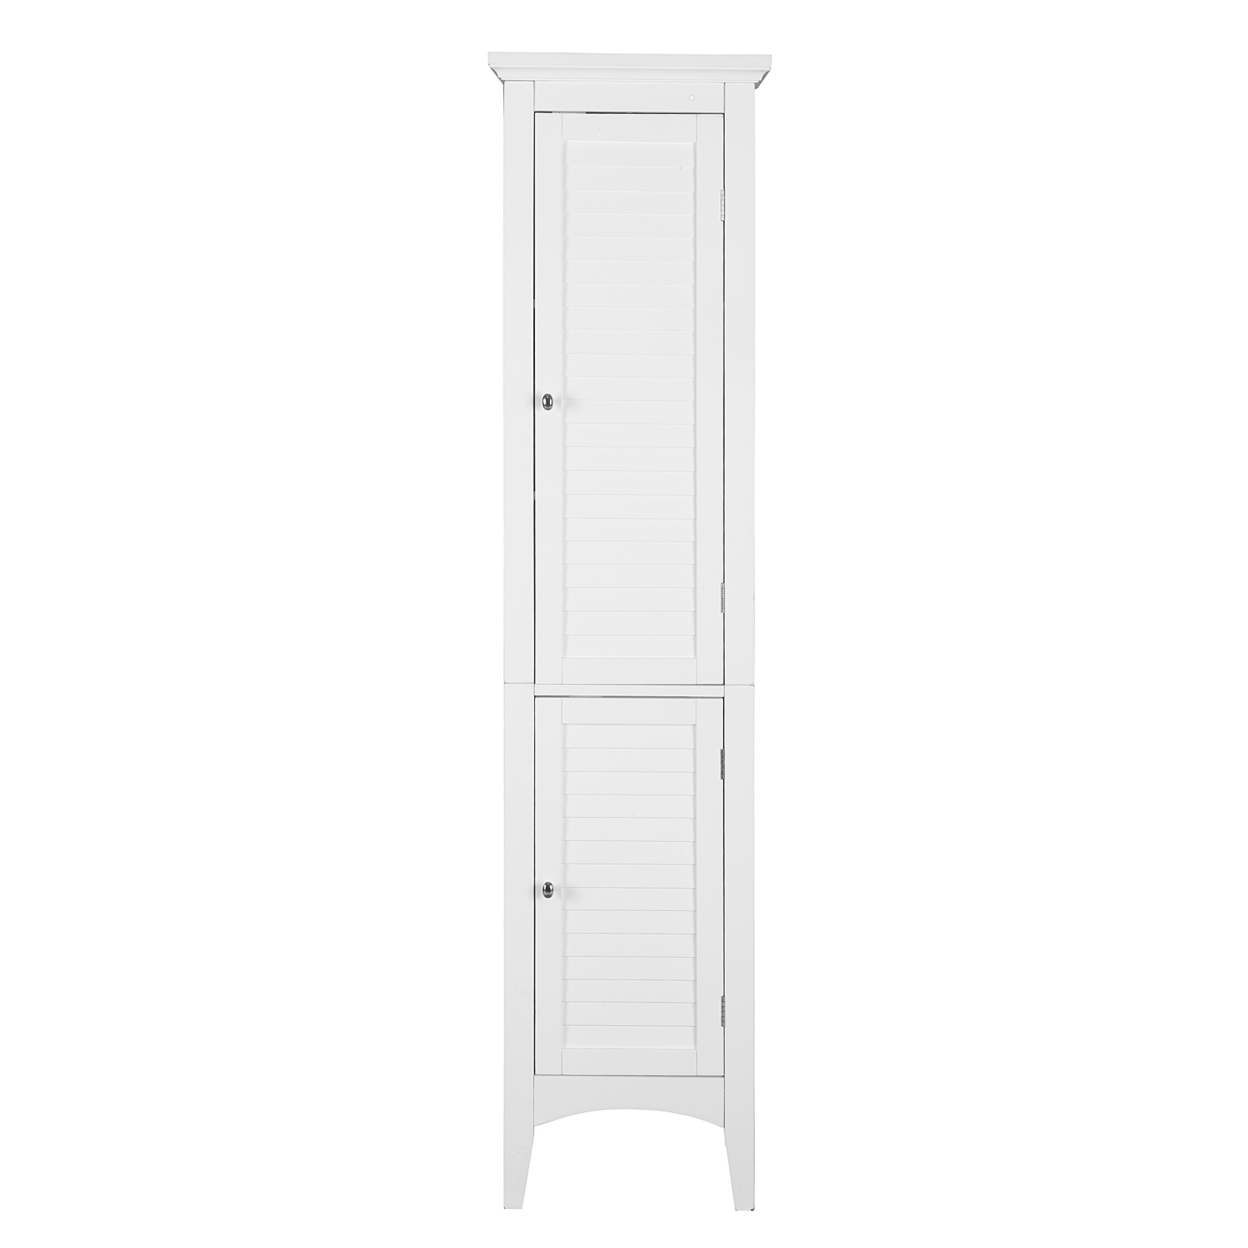 Elegant Home Fashions Wooden Bathroom Cabinet Standing ELG-588